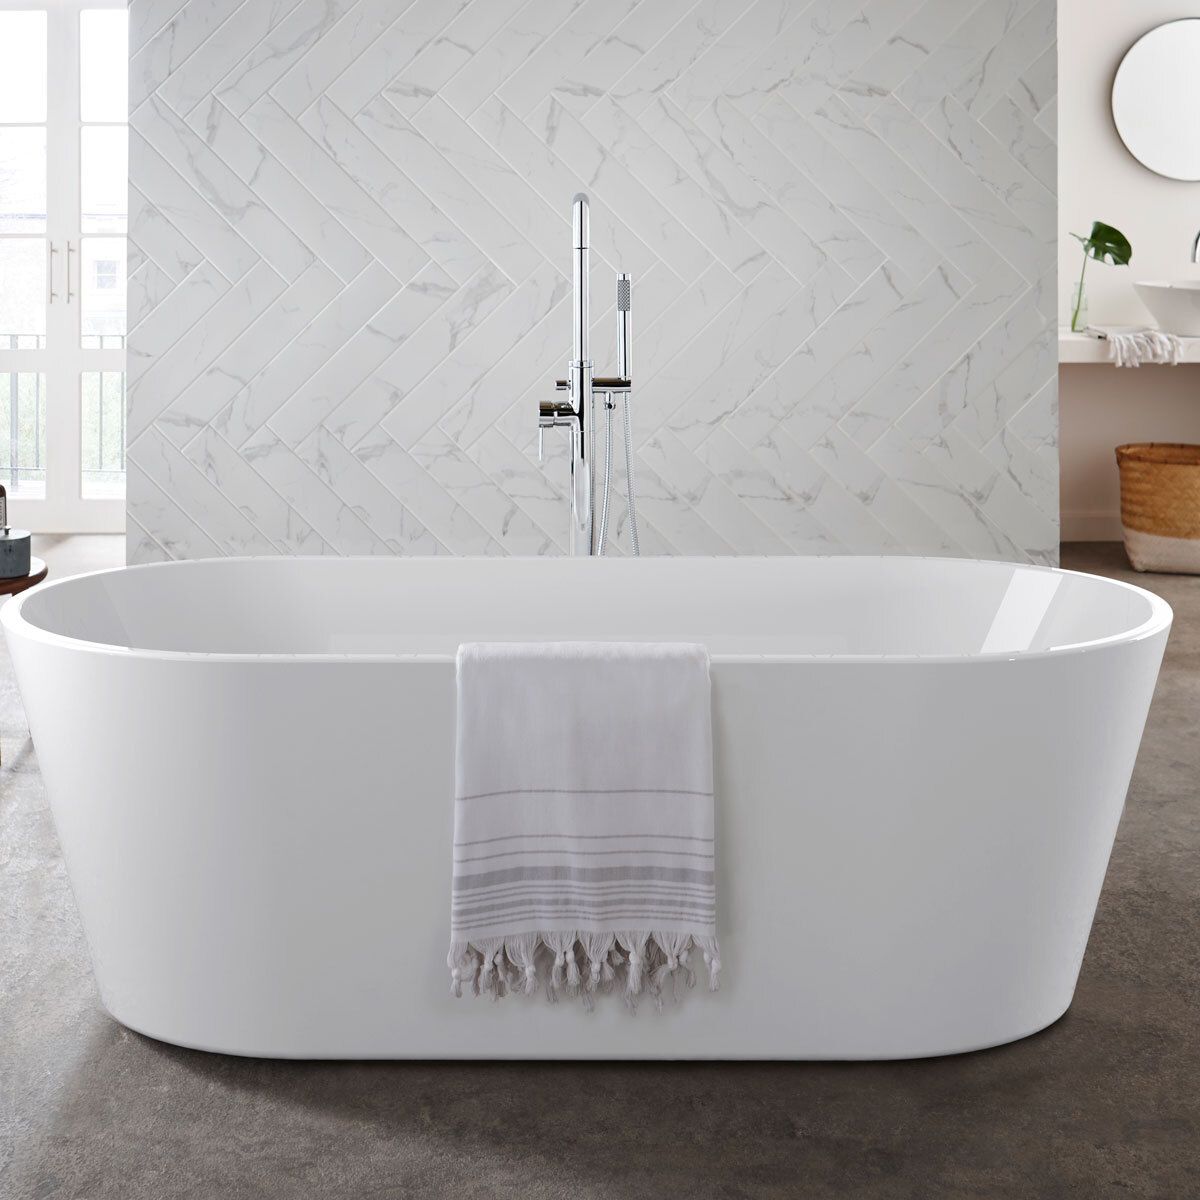 Coast 1500 x 750 Freestanding Bath